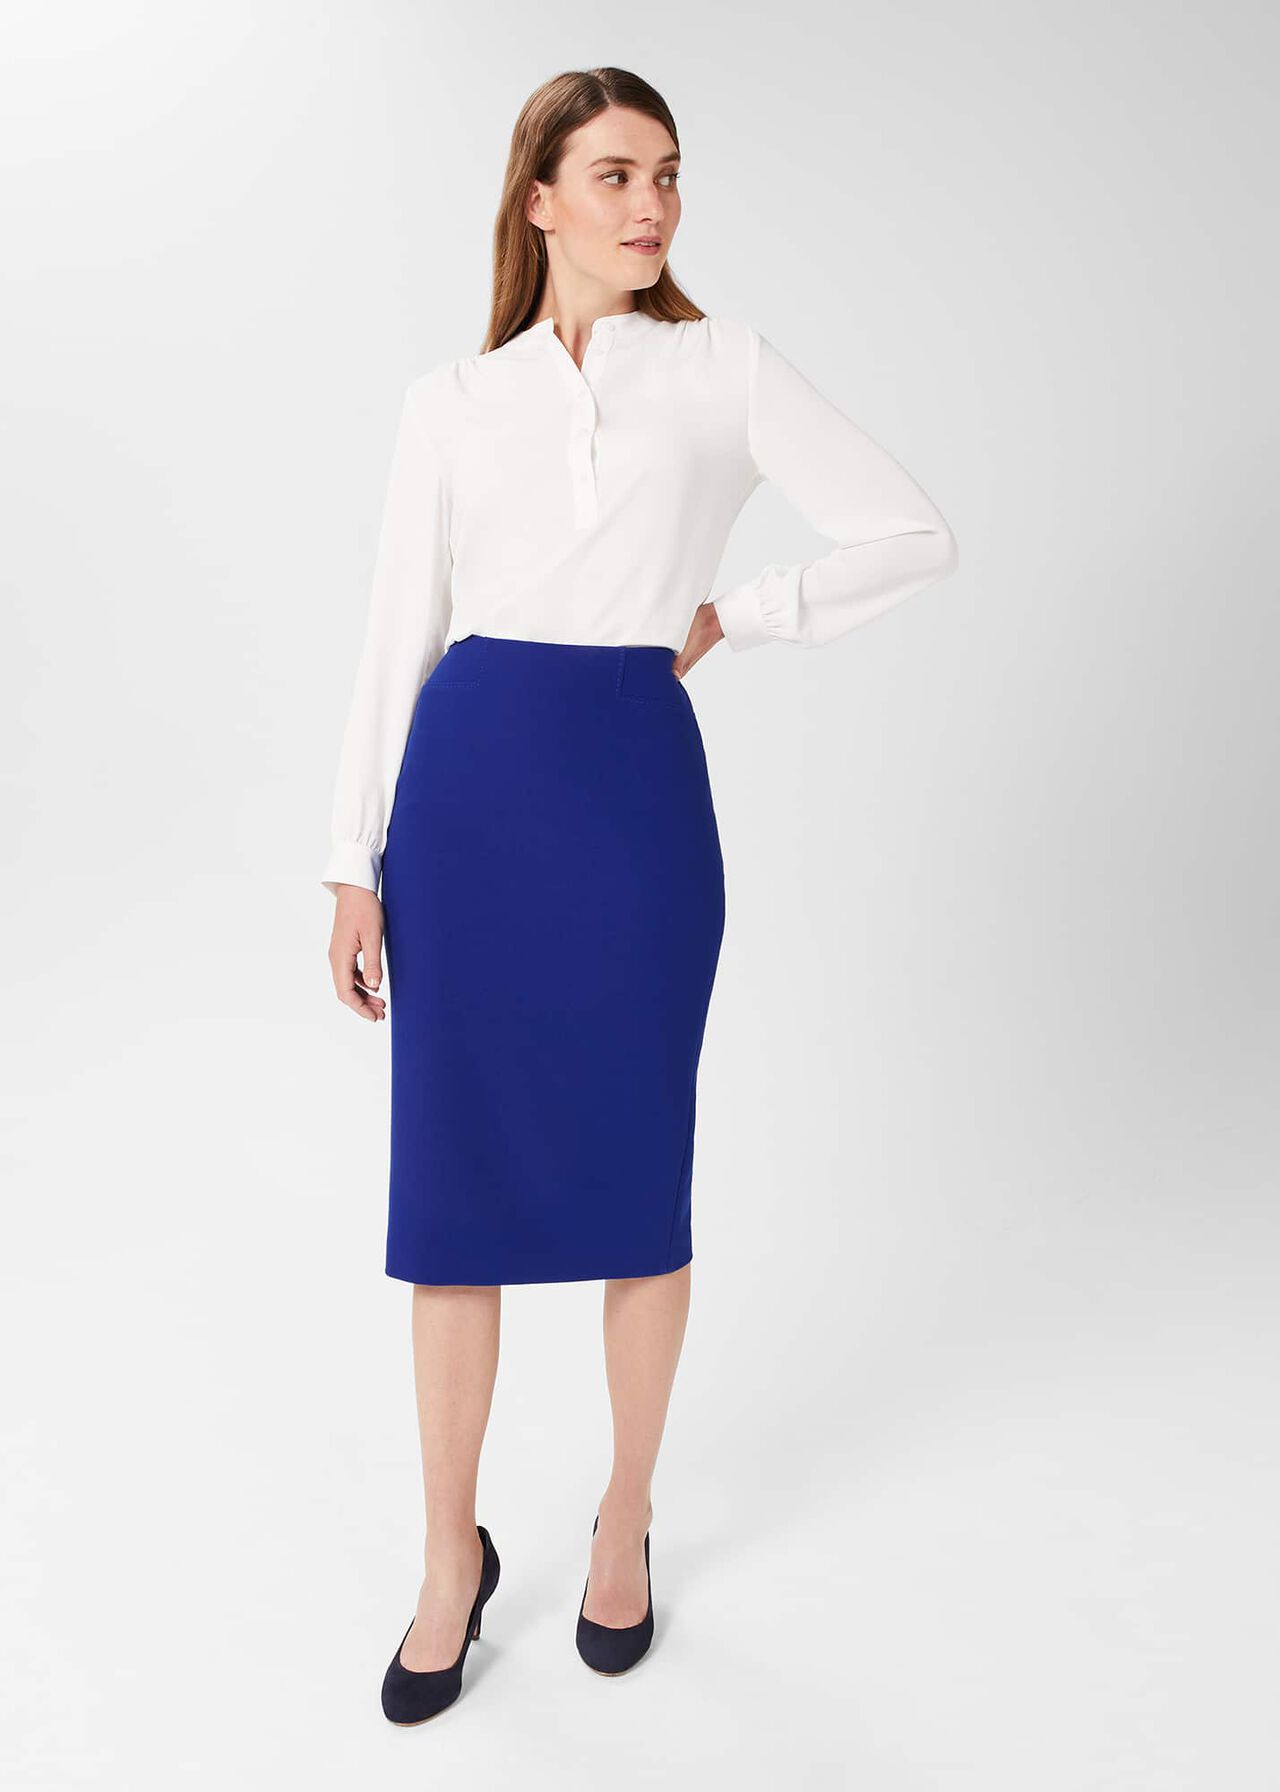 Royal Blue Skirt Outfit Ideas | lupon.gov.ph